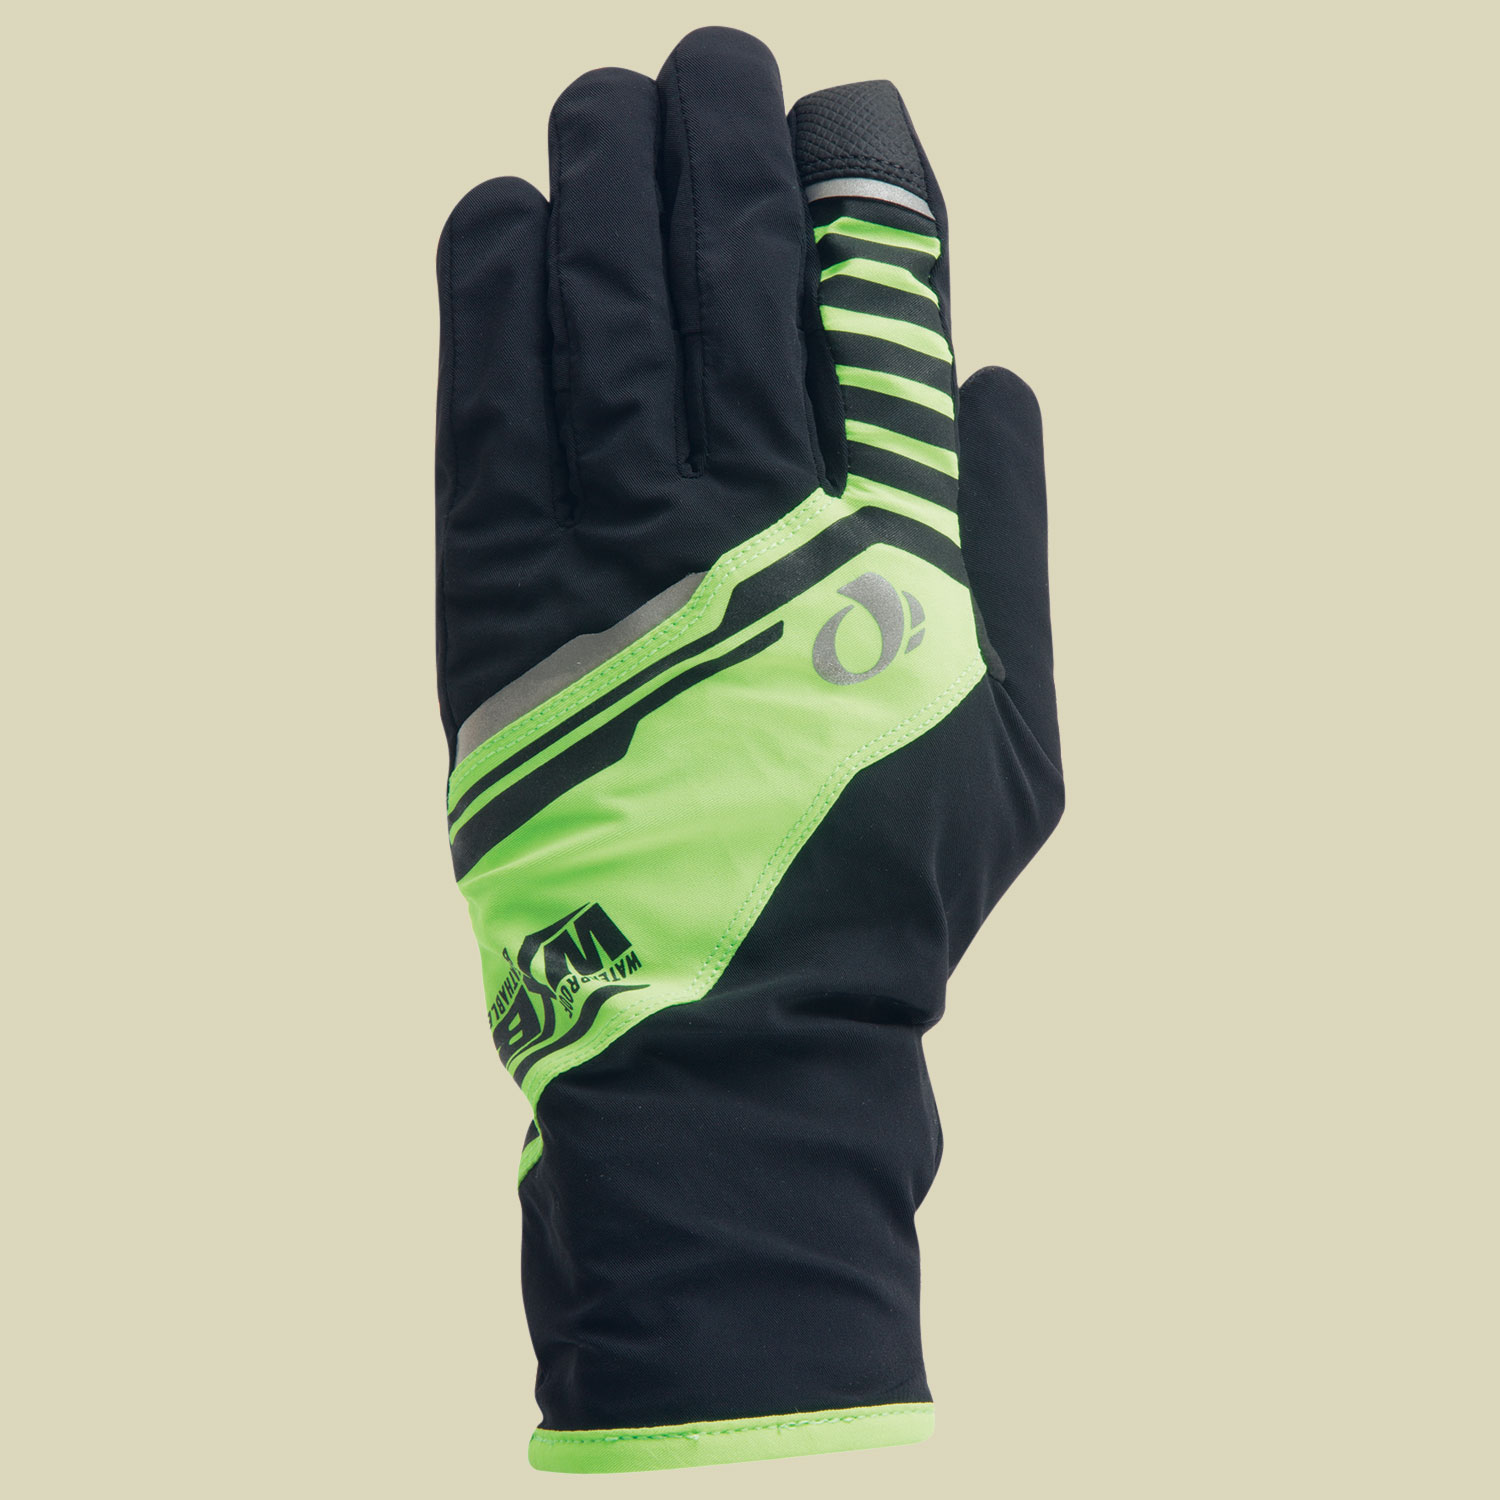 Pro Barrier WxB Glove